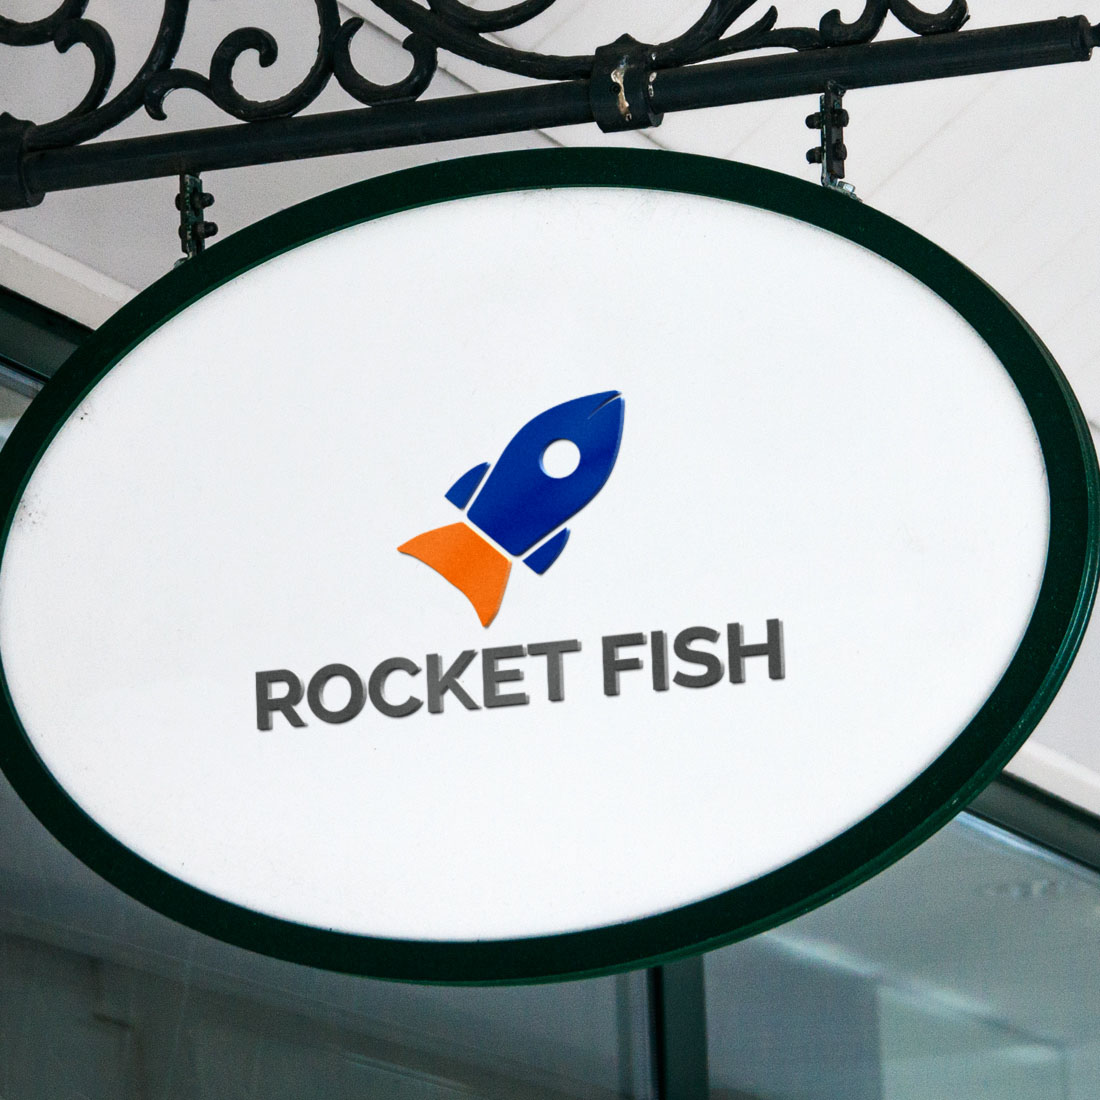 Clean Rocket Fish Logo Design cover image.